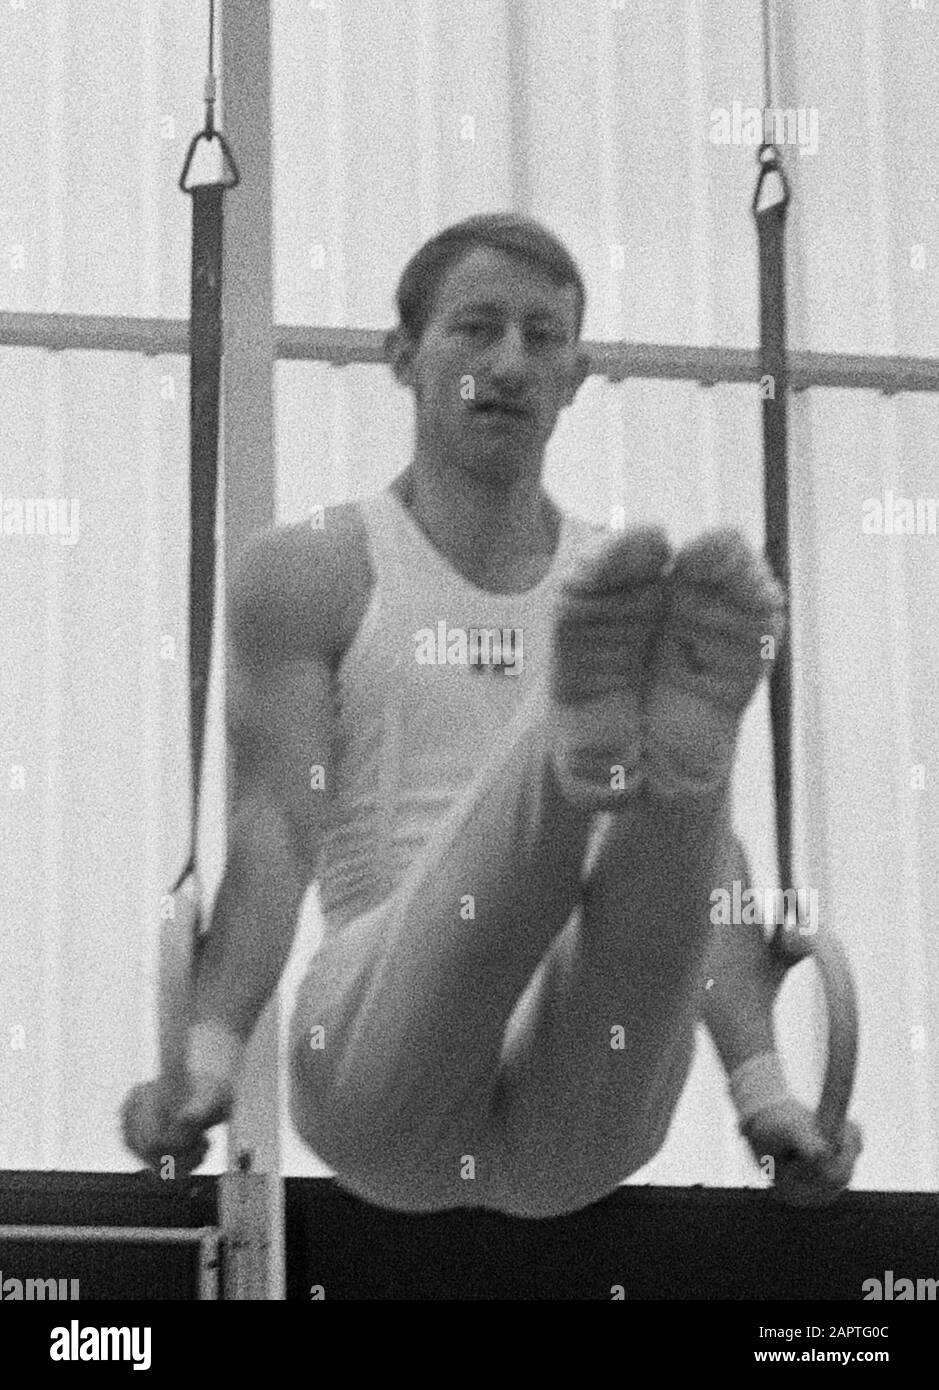 The Netherlands versus Denmark gymnastics at Zaandam. Hans Peter Nielsen (champion Denmark) to rings in action; Stock Photo